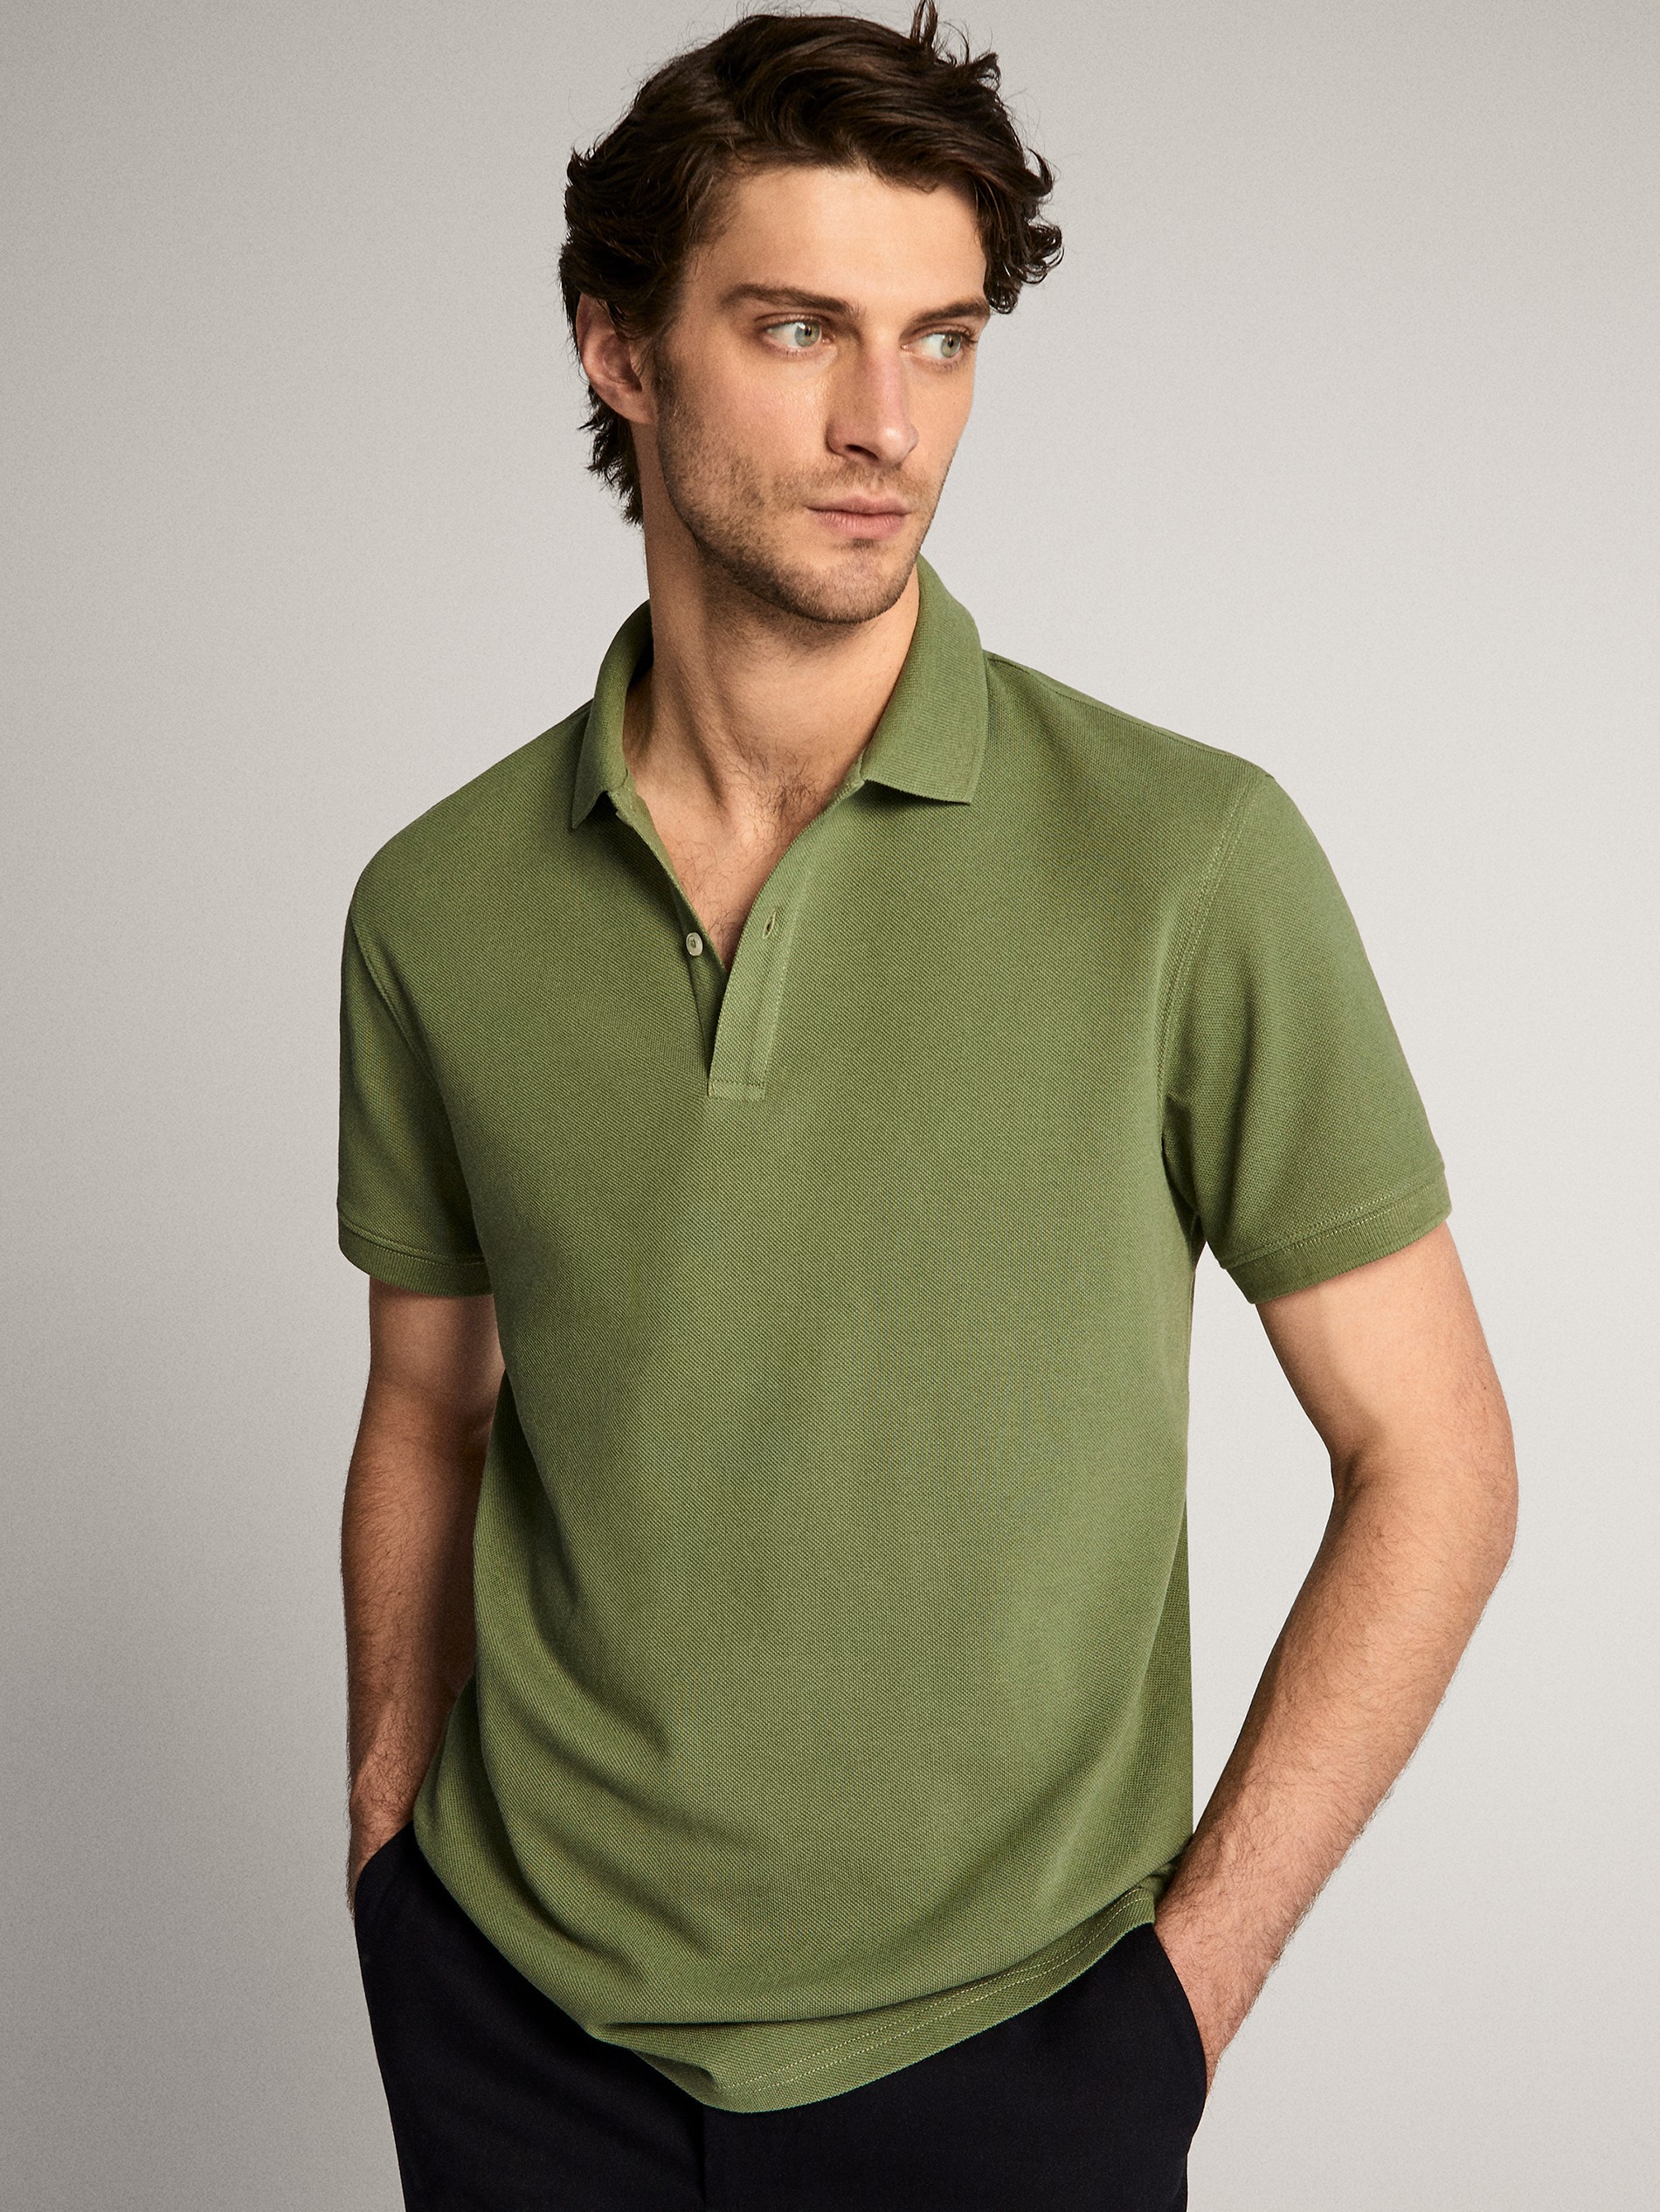 men's cotton polo shirts